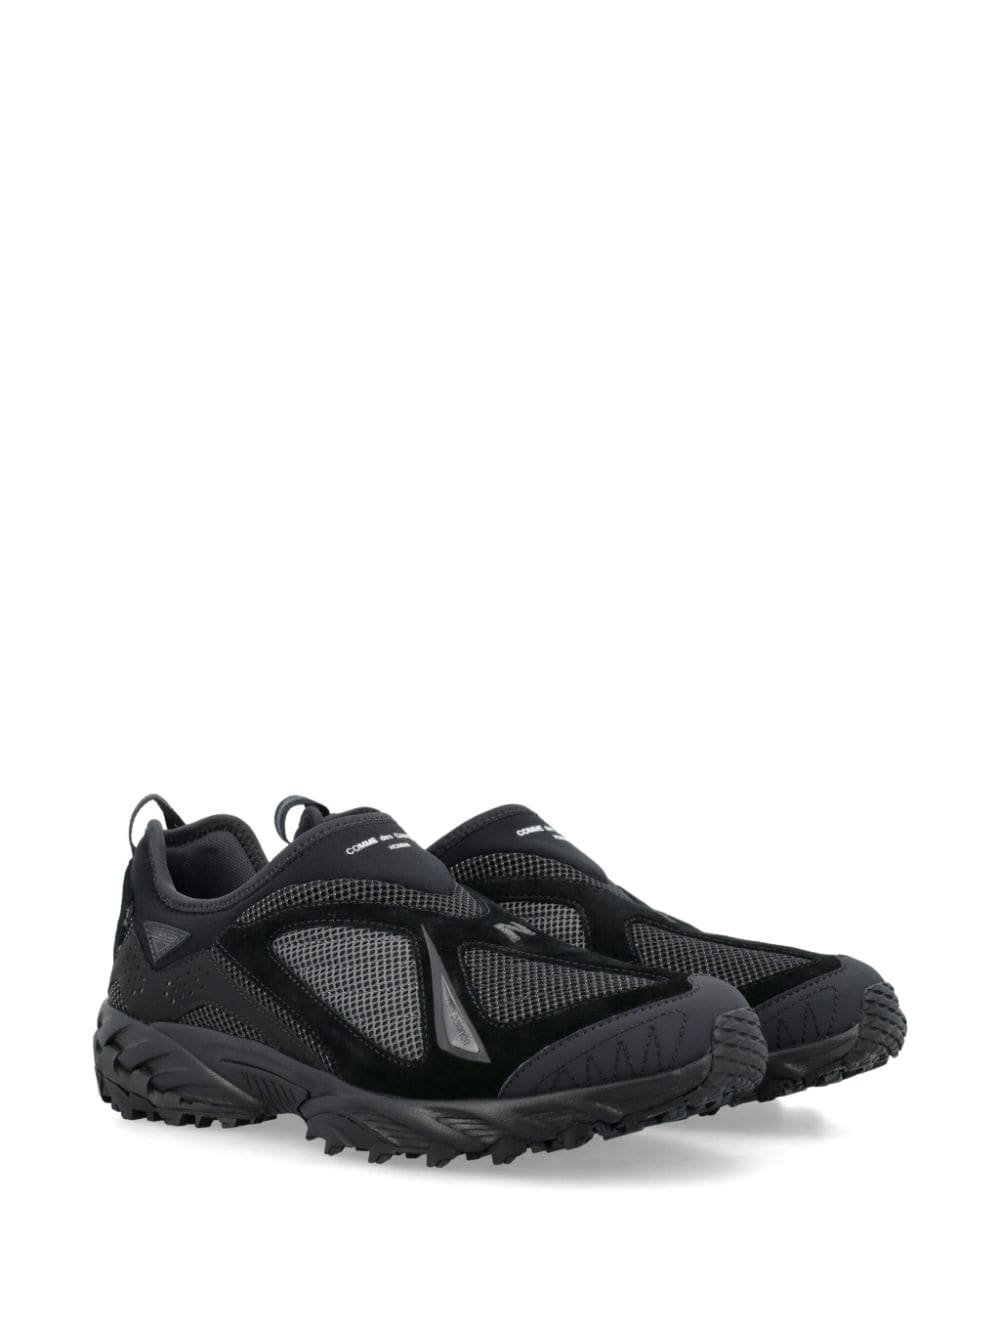 Comme des Garçons Homme Plus x New Balance ML610SCD sneakers - Zwart